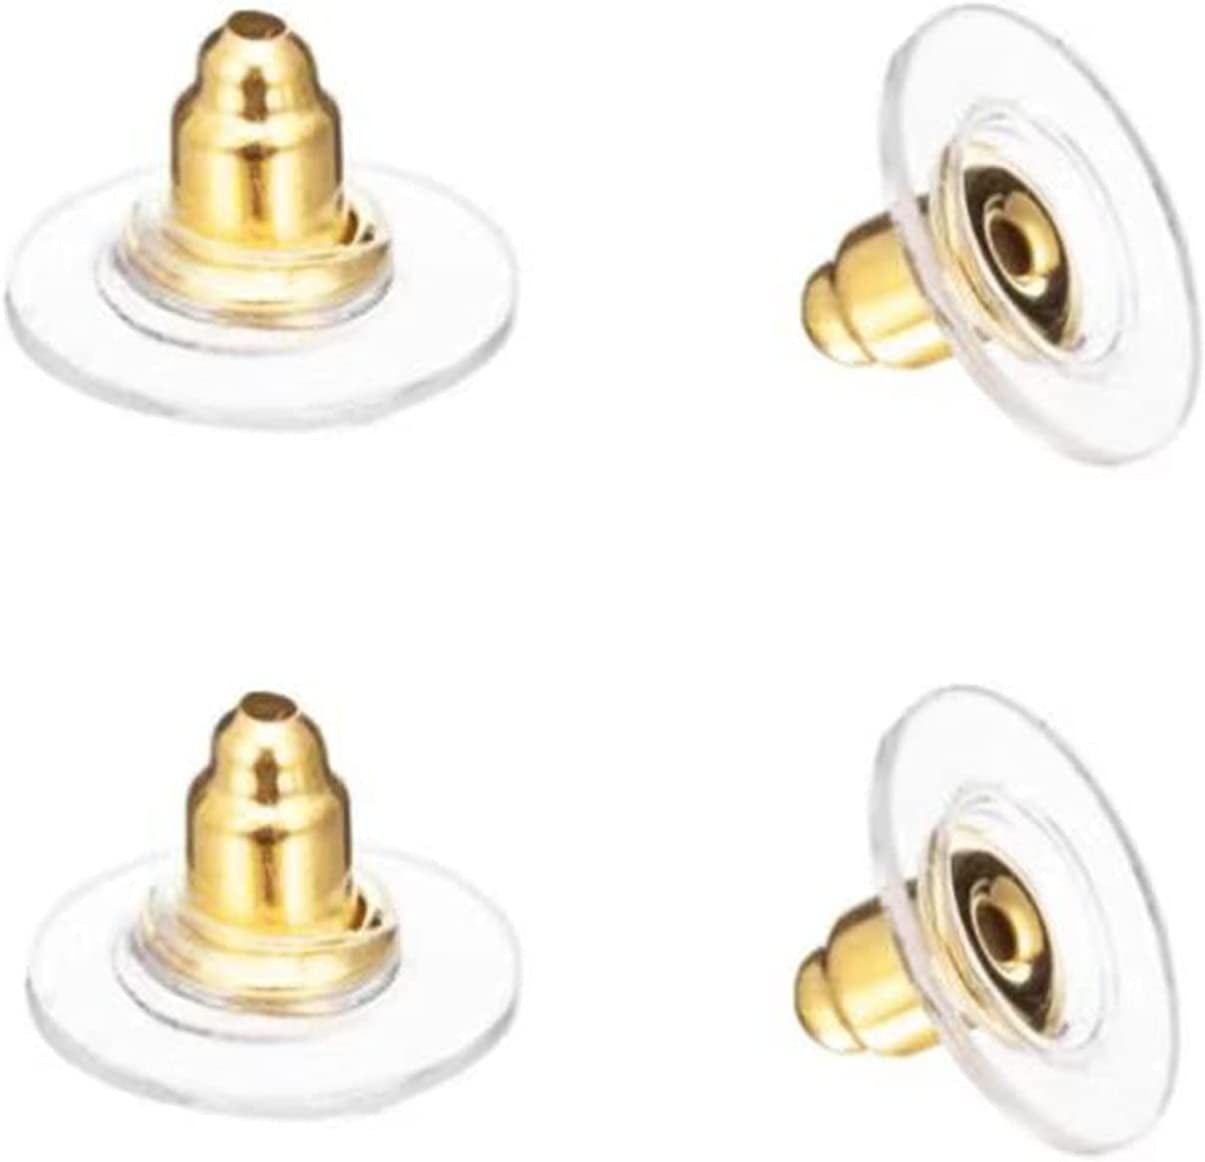 20pcs Secure Earring Backs for Heavy Earrings Stoppers Plastic Discs KC  Gold